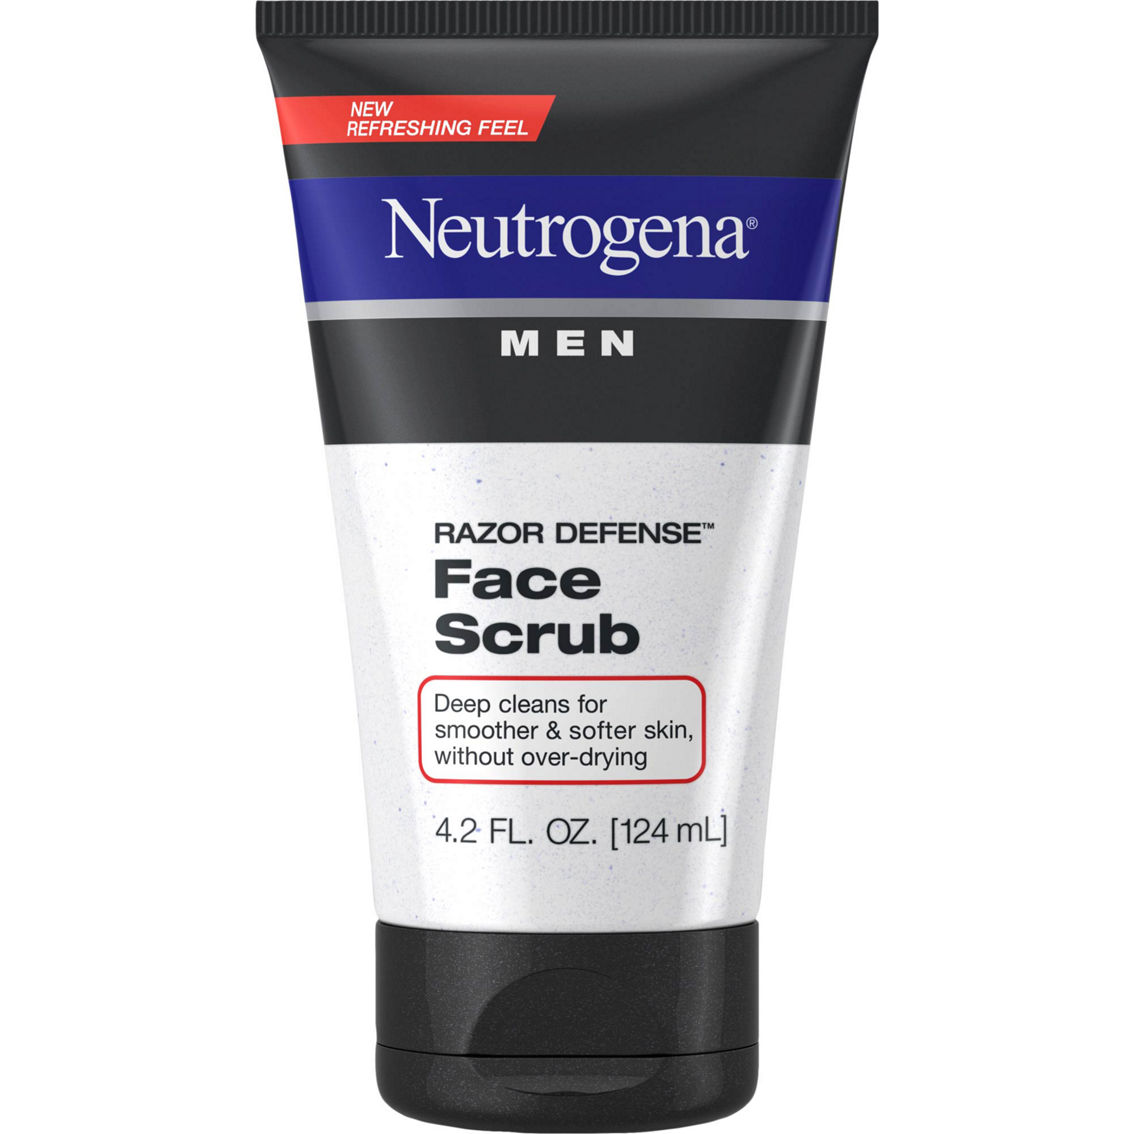 Neutrogena Men Razor Defense Daily Exfoliating and Conditioning Face Scrub 4.2 oz.